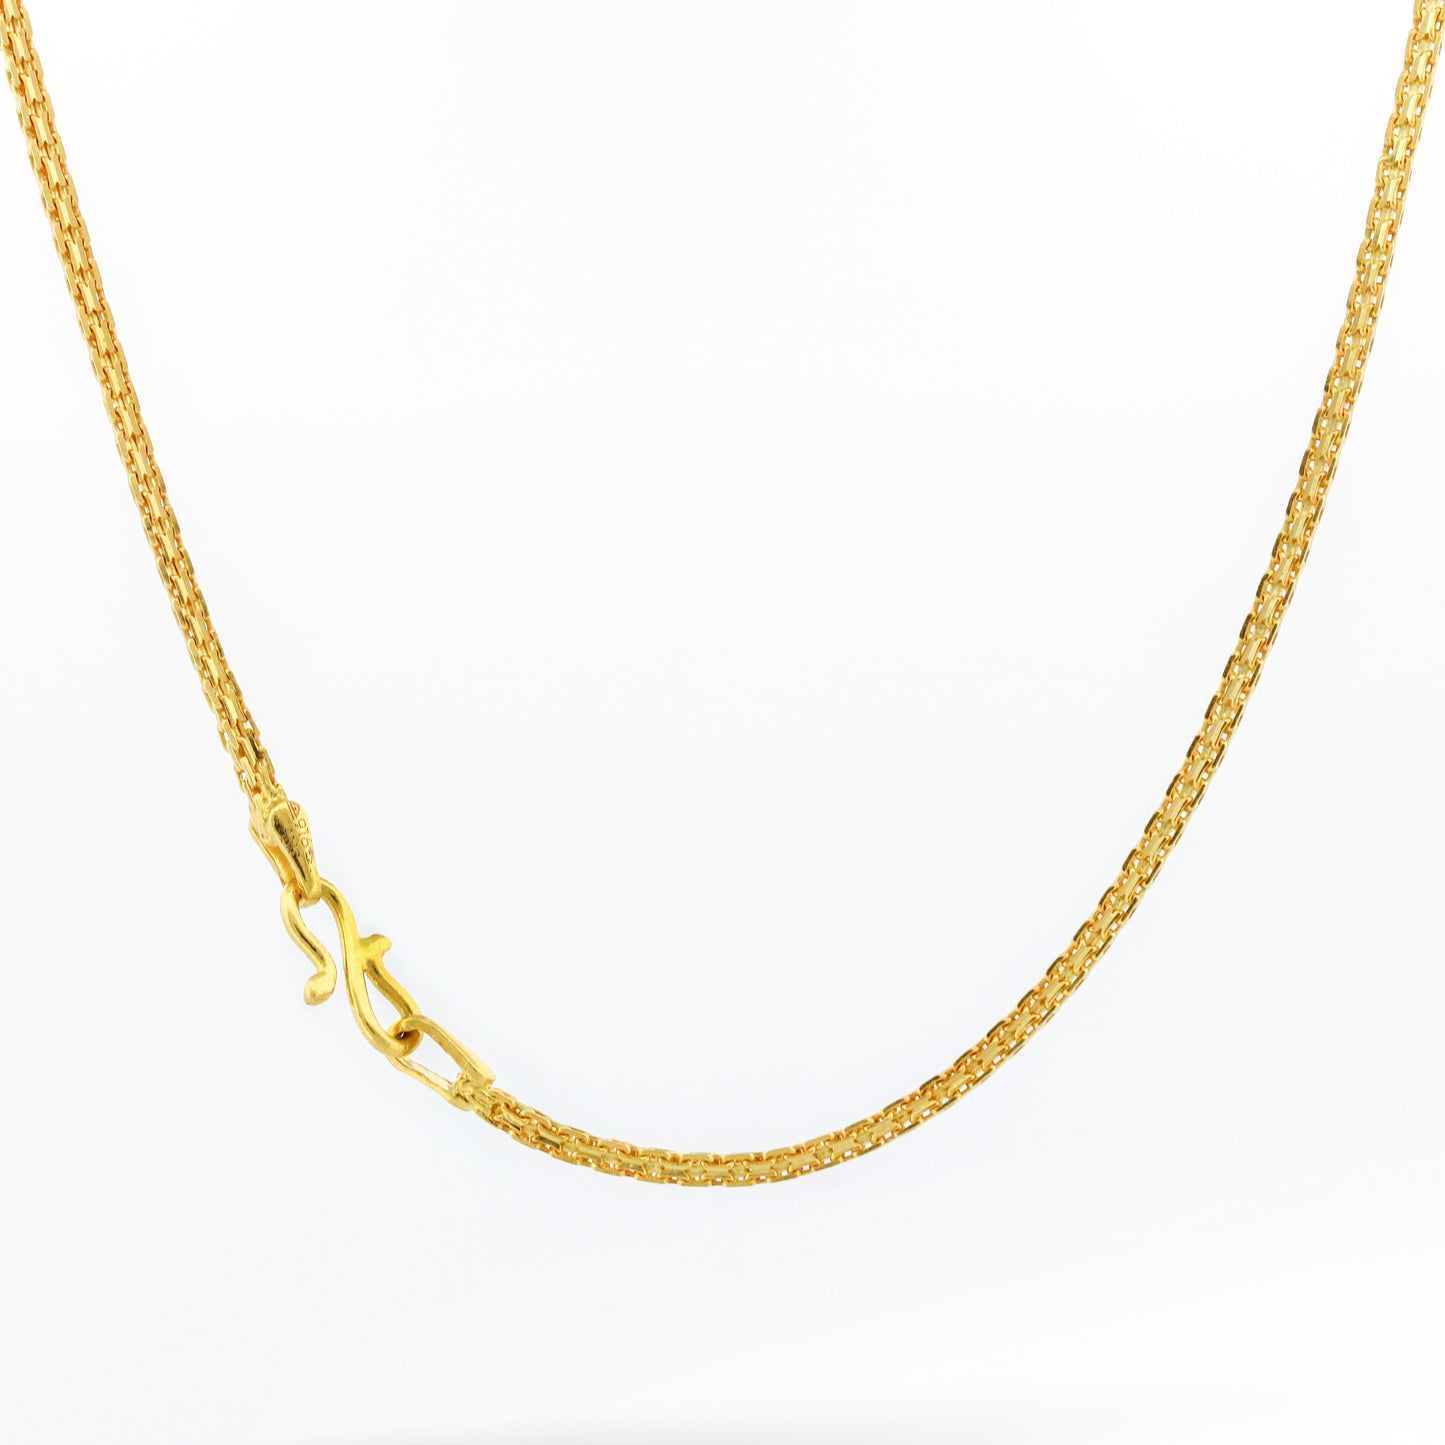 Signed 22k Solid Gold Elephant Pendant Necklace Bismark Chain